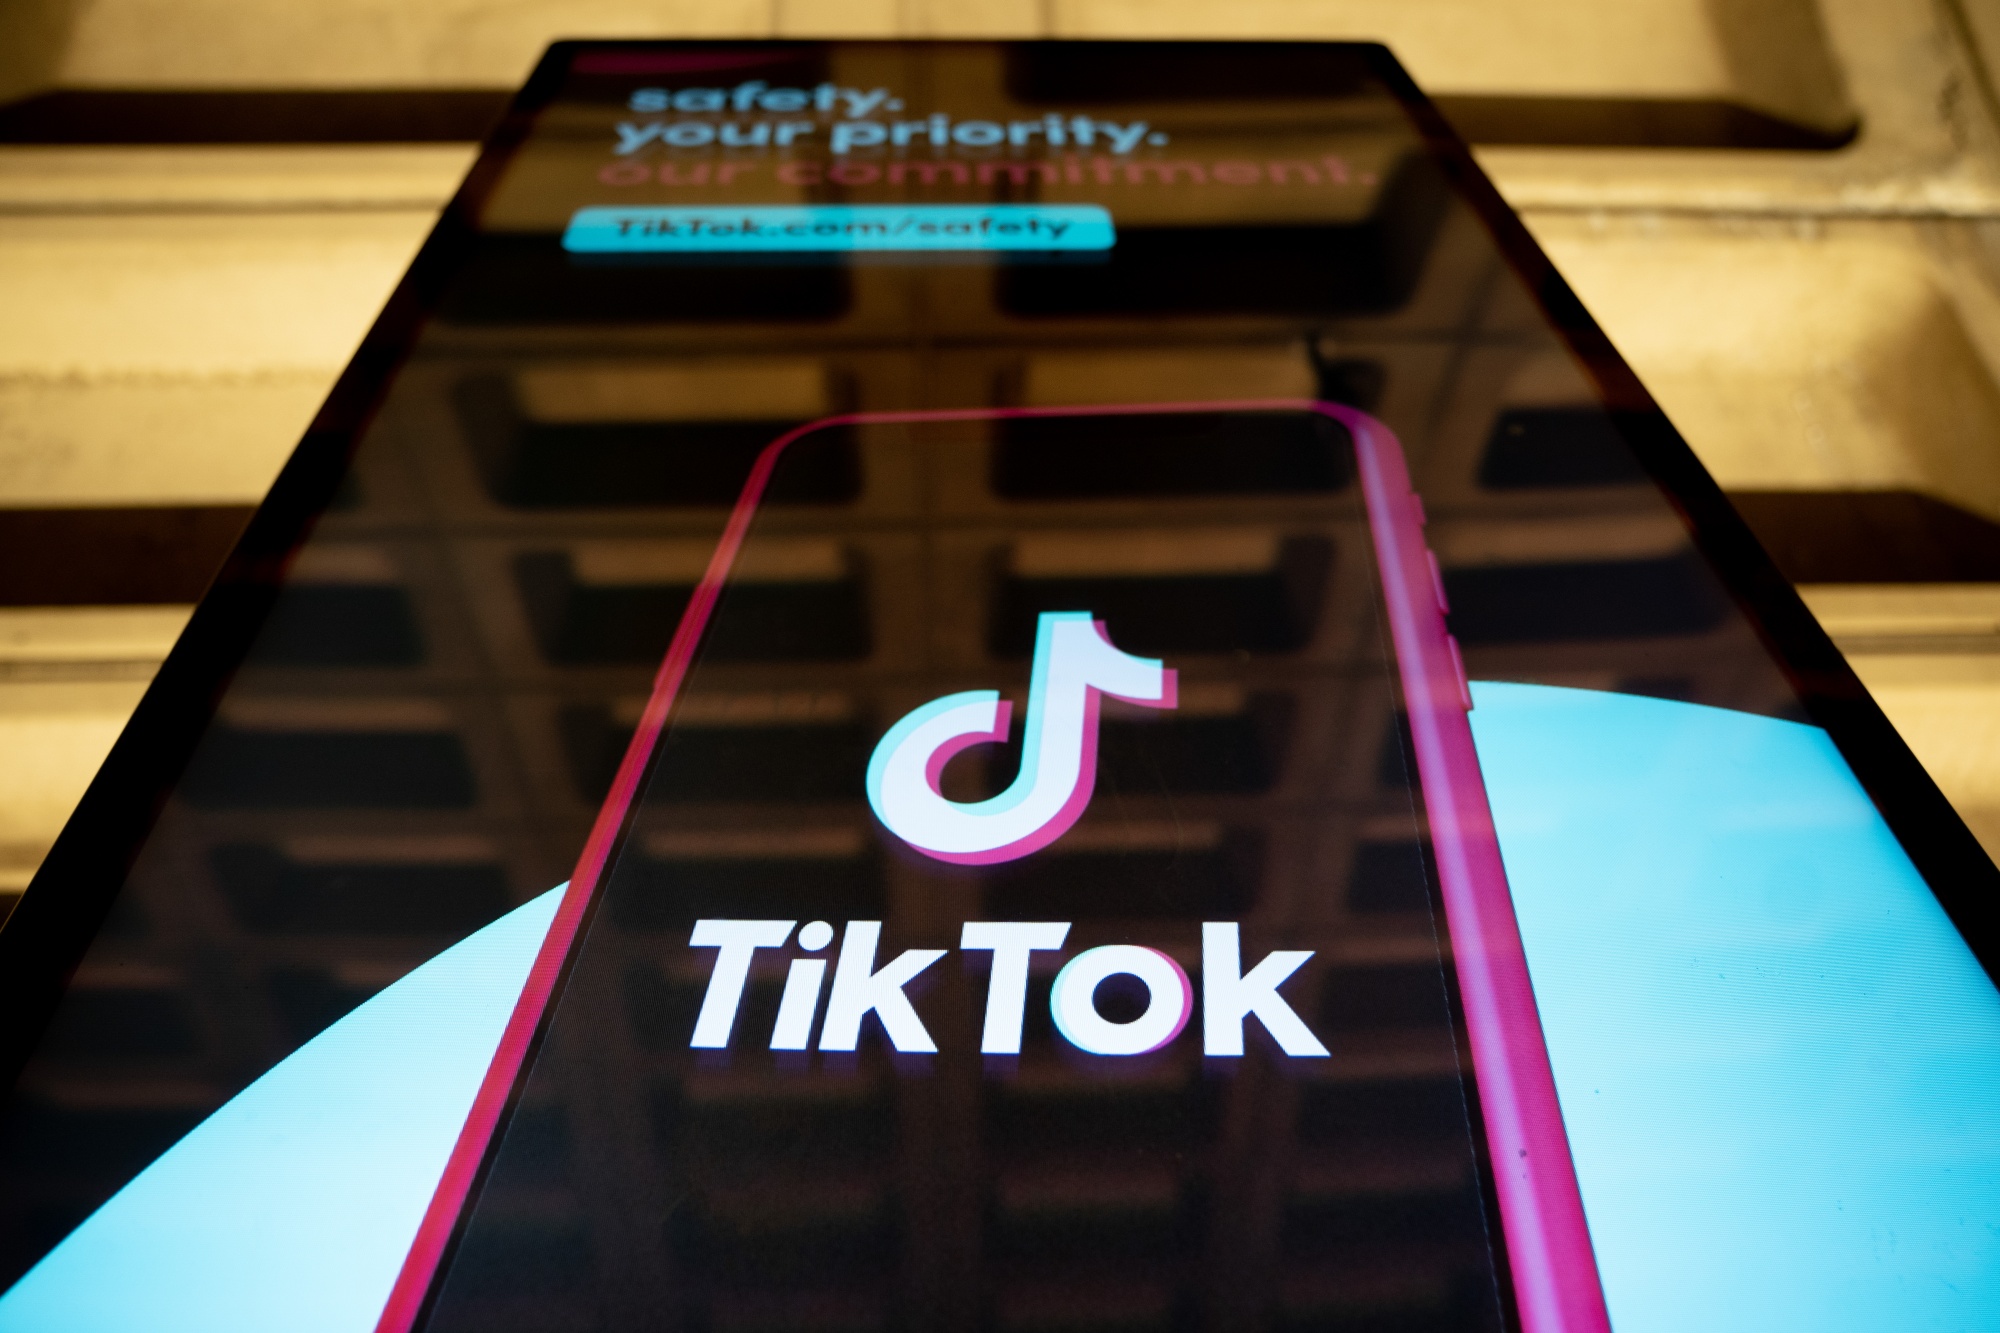 A TikTok advertisement at a Metro station in Washington, DC.